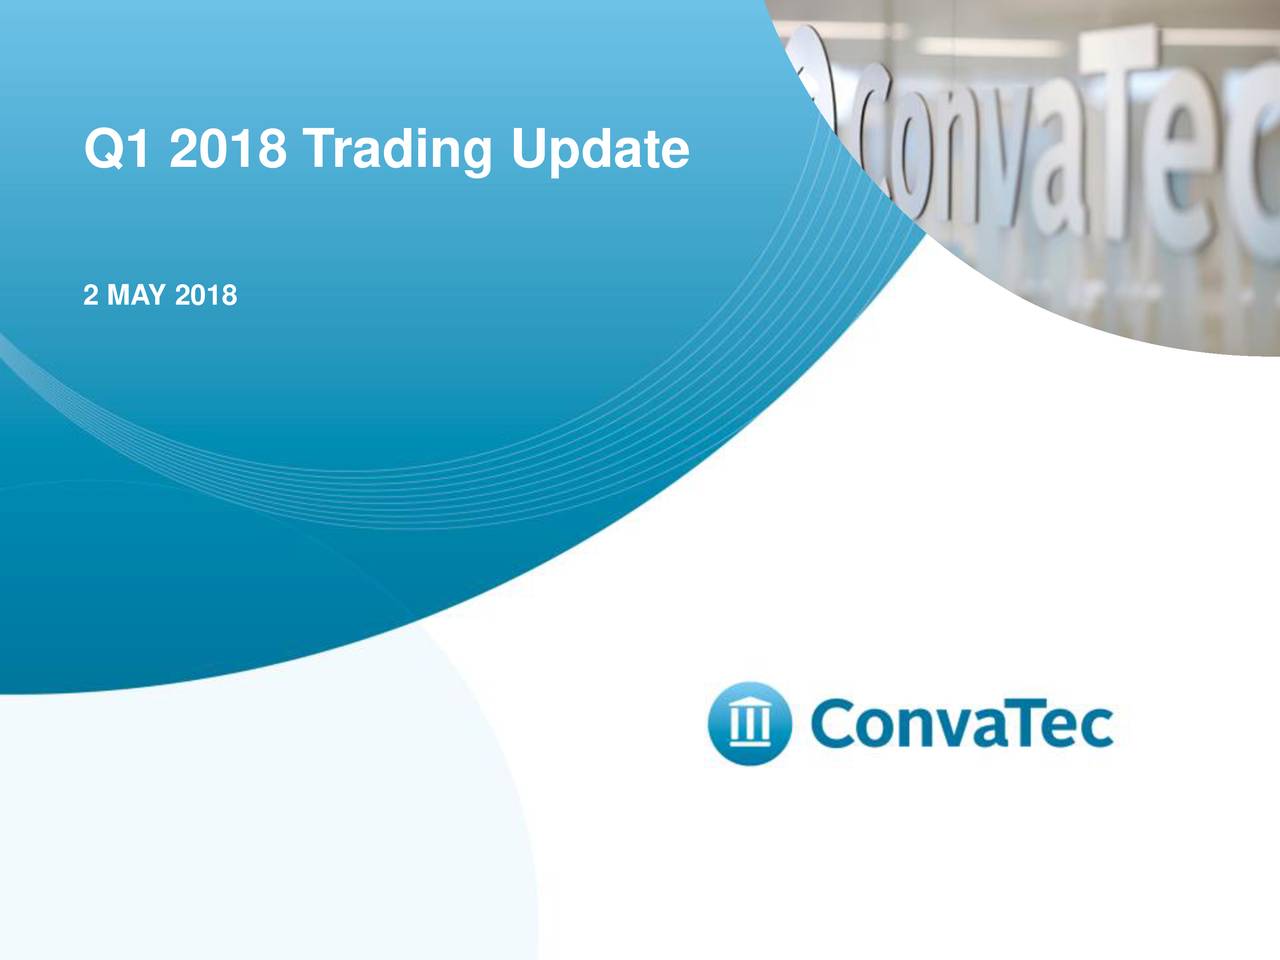 Q1 2018 Trading Update